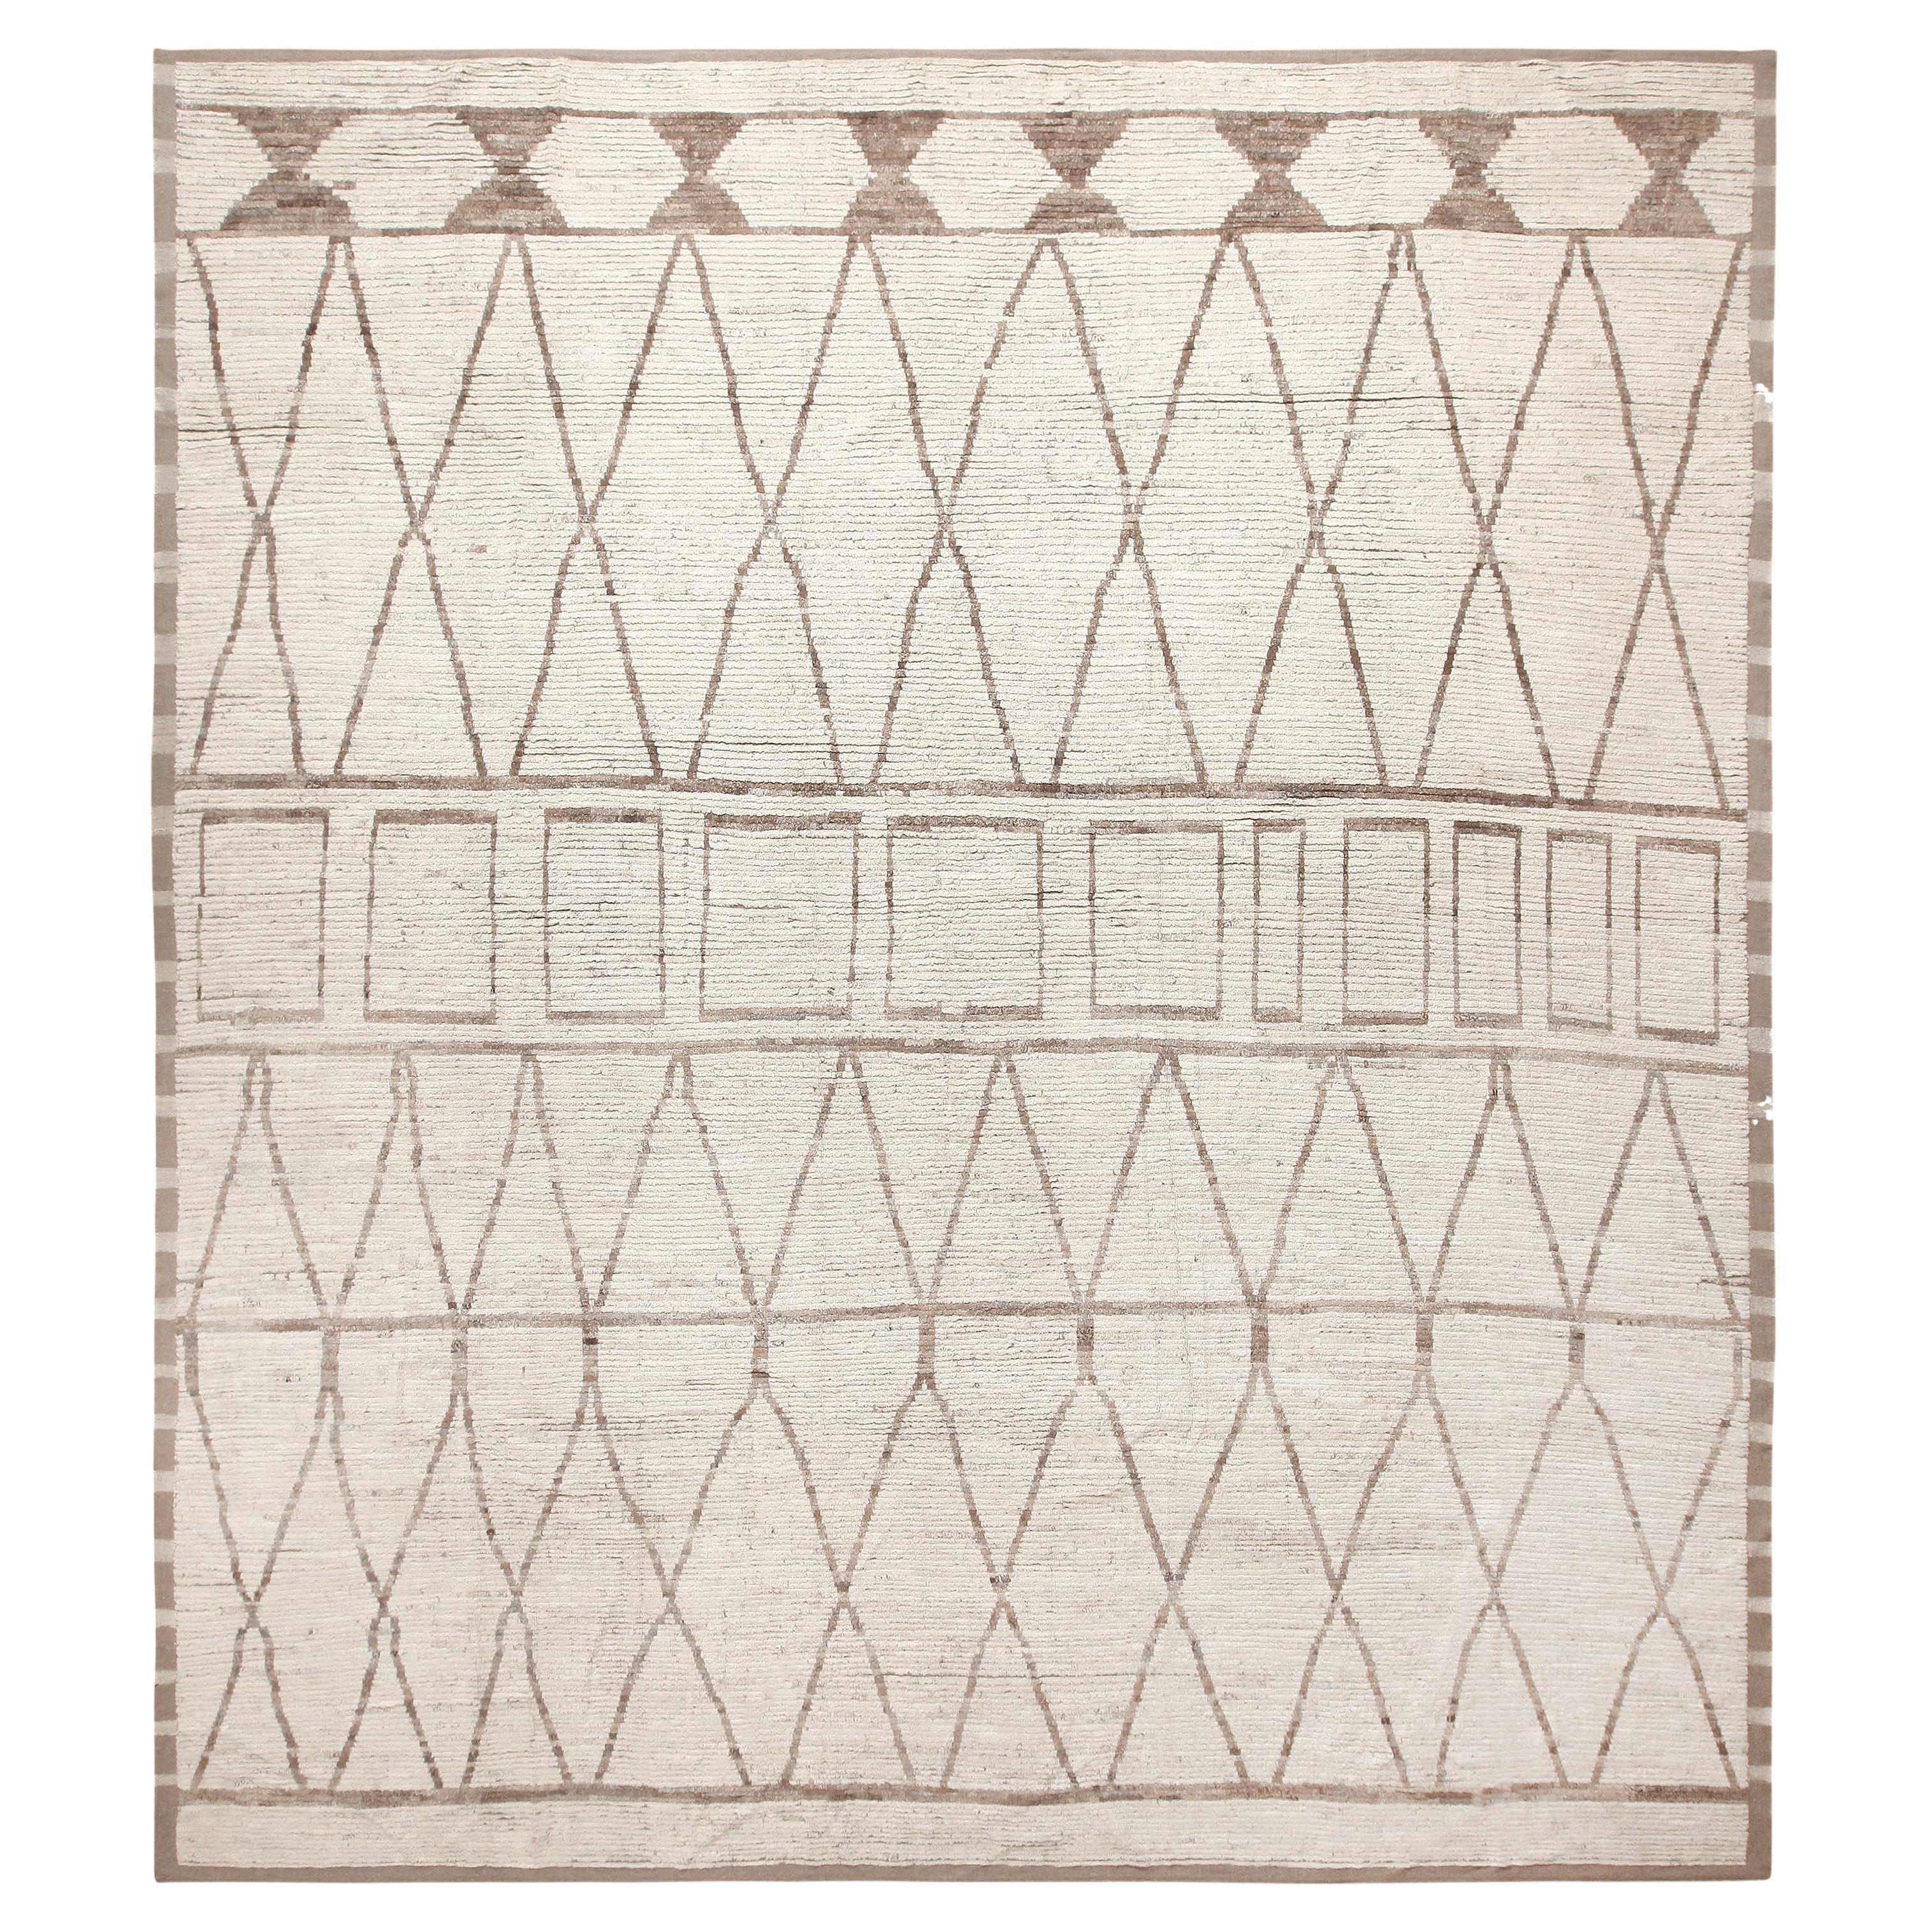 Nazmiyal Collection Geometric Ivory Modern Decorative Area Rug 13'2" x 14'6"